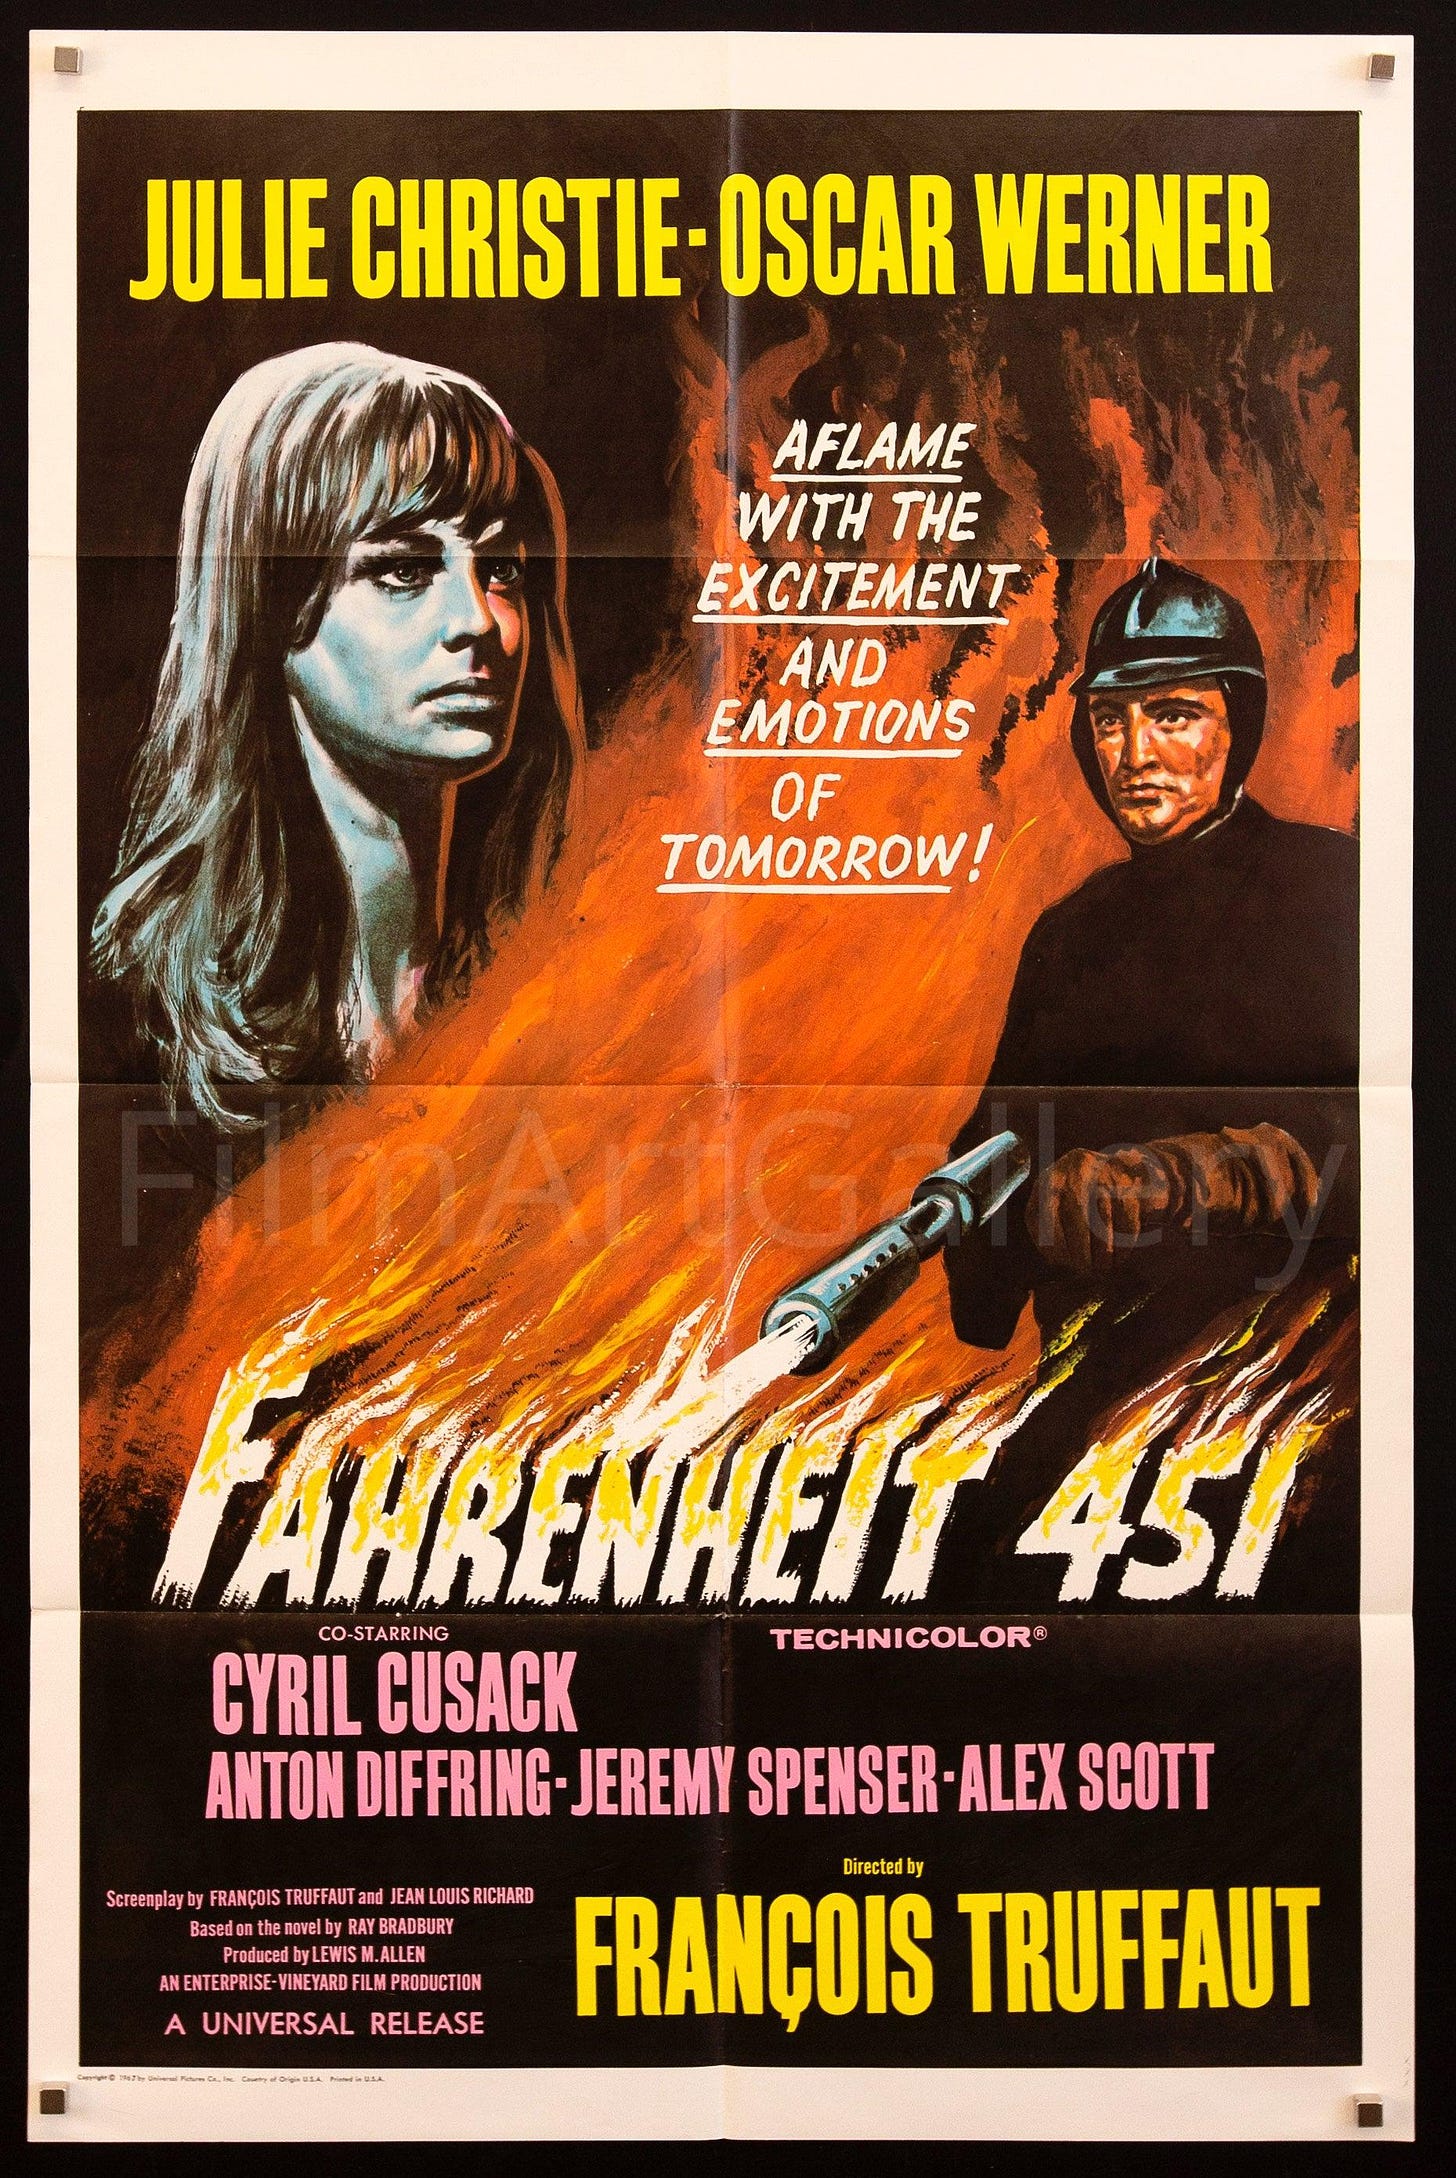 Fahrenheit 451 Movie Poster 1966 1 Sheet (27x41)